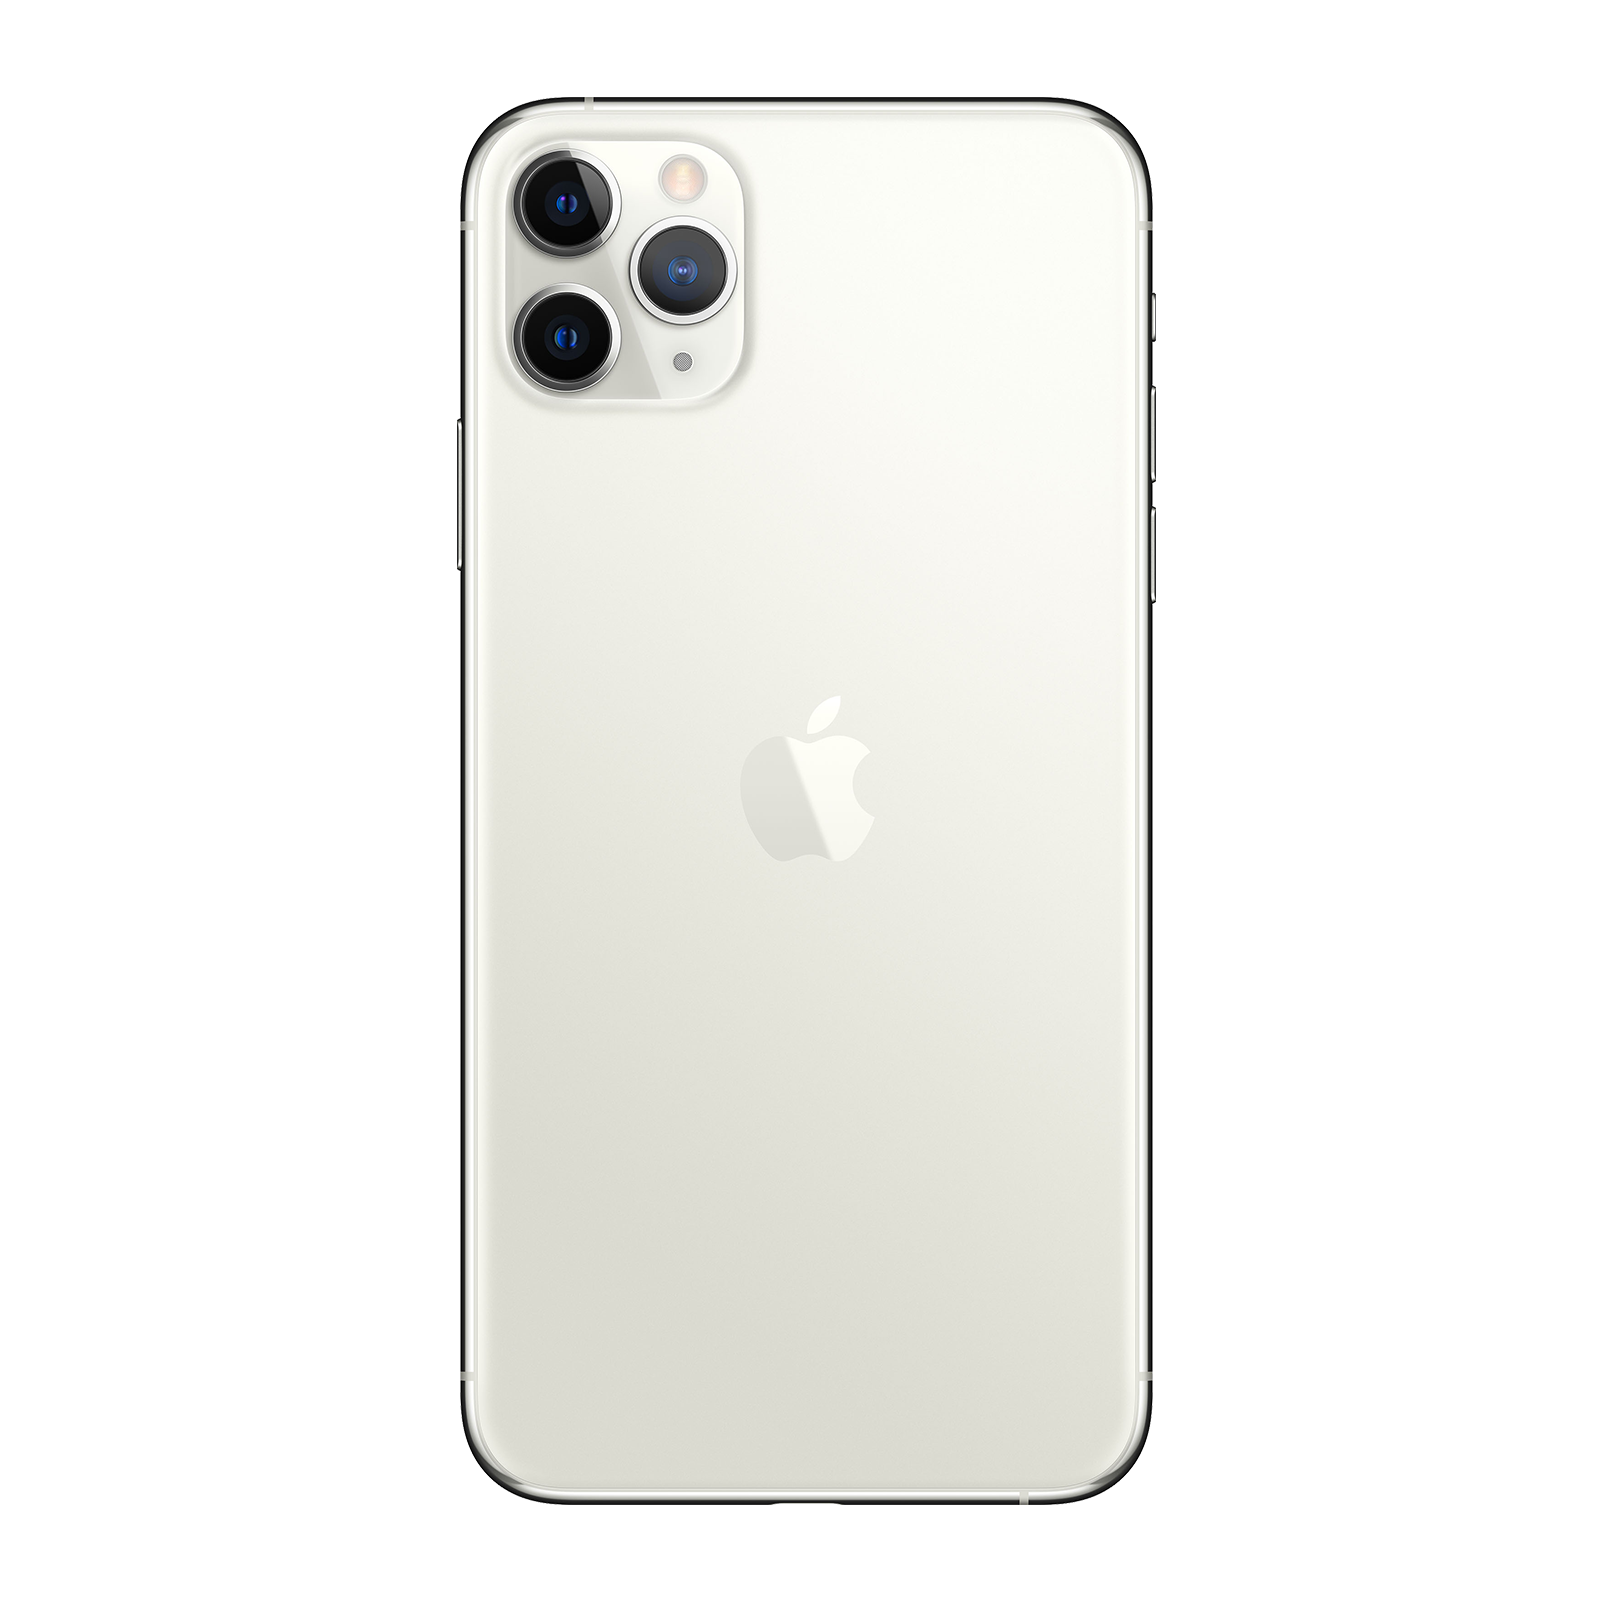 Apple iPhone 11 Pro 64GB Silver Good - Verizon